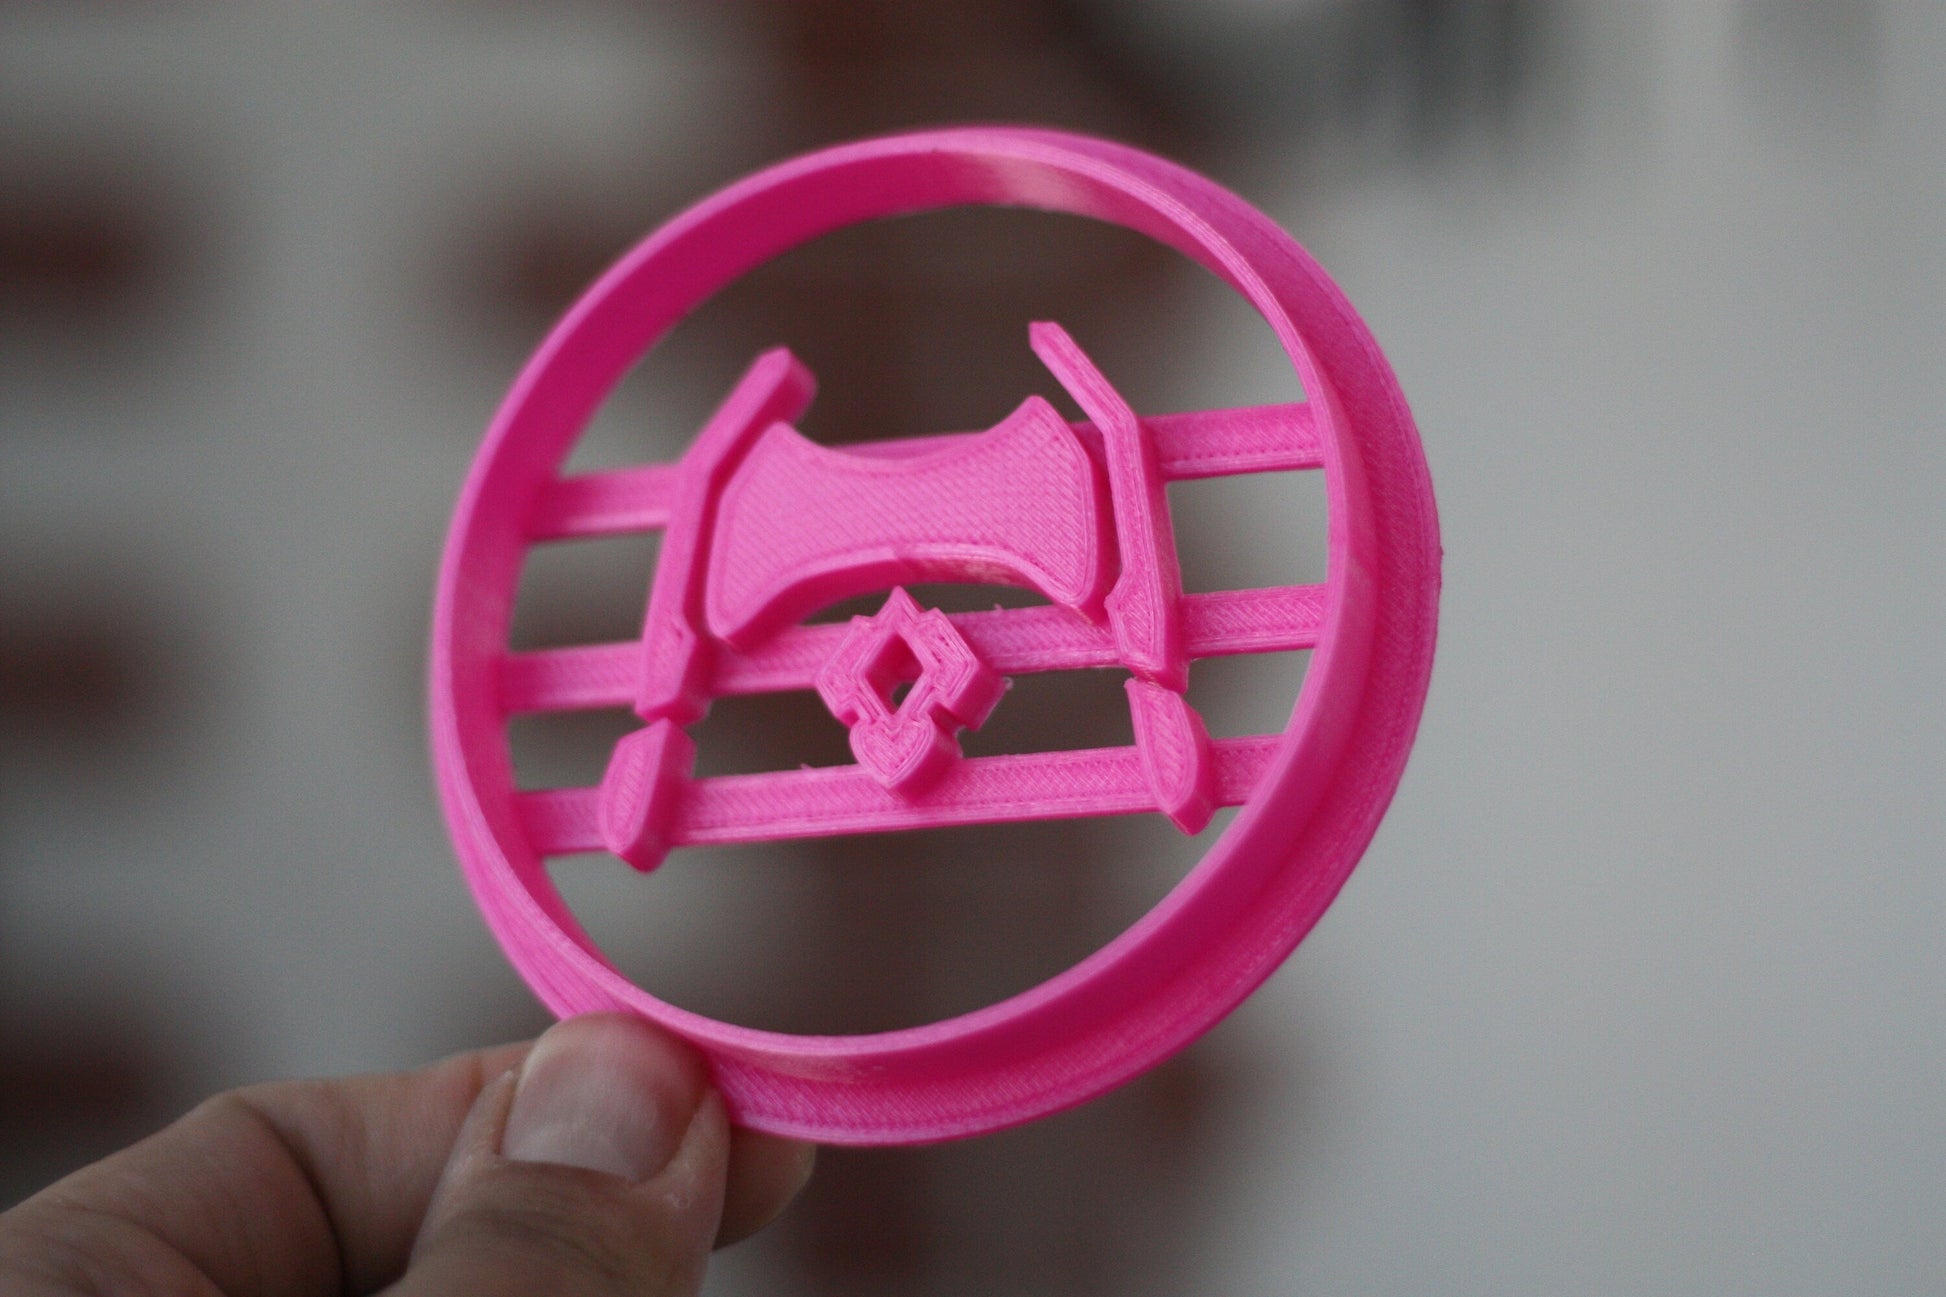 Cookie Cutter : Pharah, Mei, Symmetra, Bastion  | OW party | 3d cookie cutters - 3DPrintProps